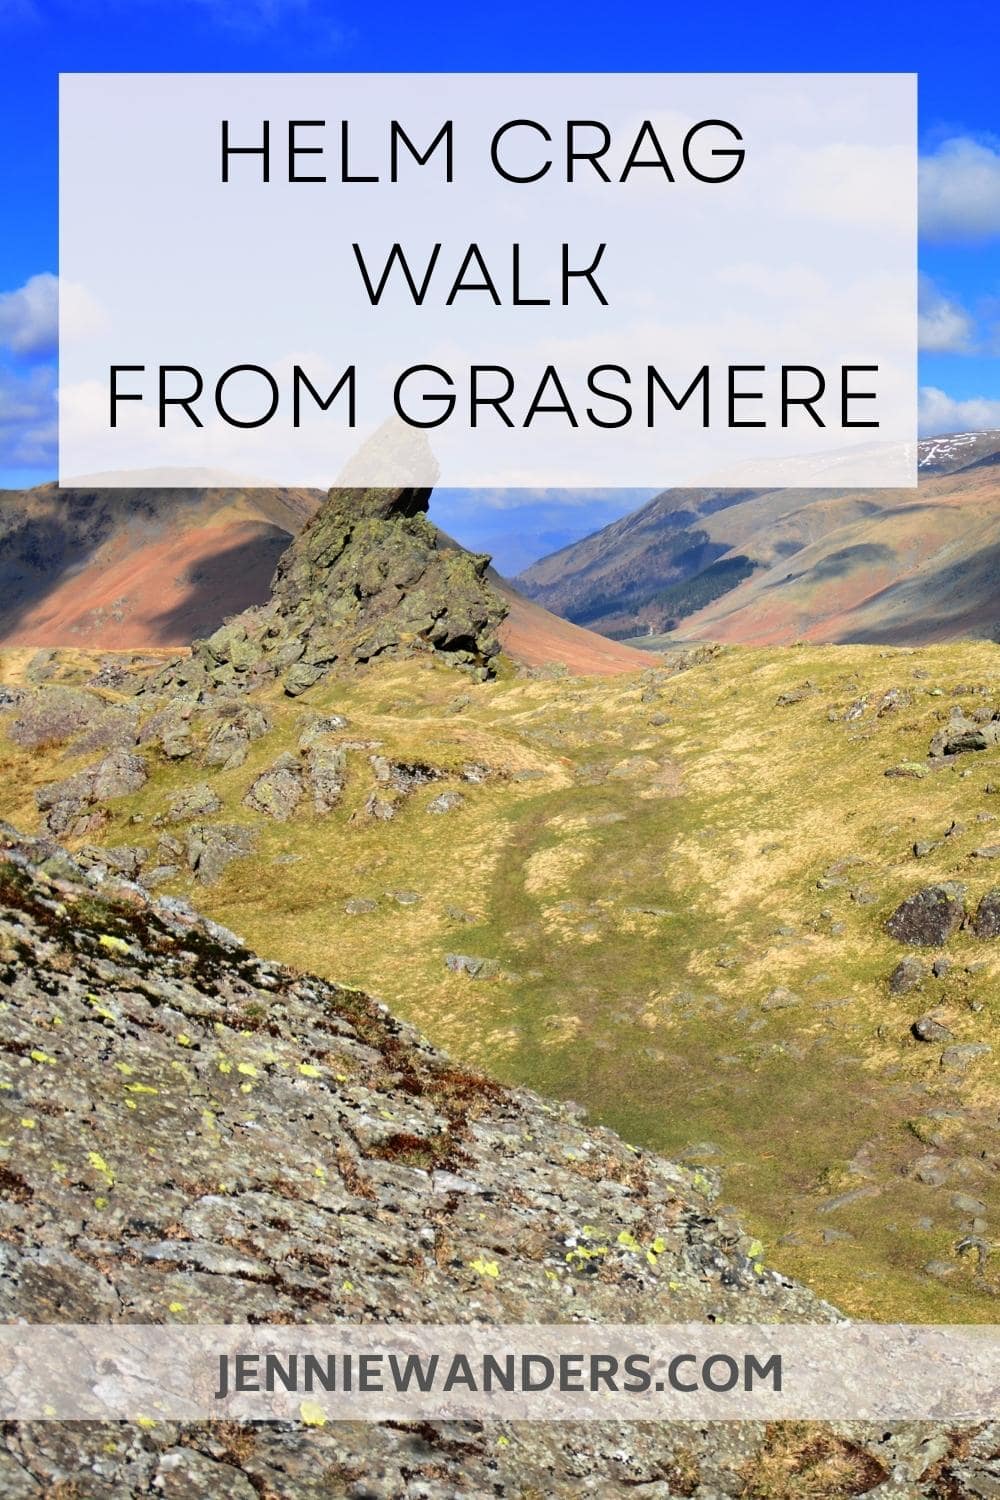 Helm Crag walk from Grasmere